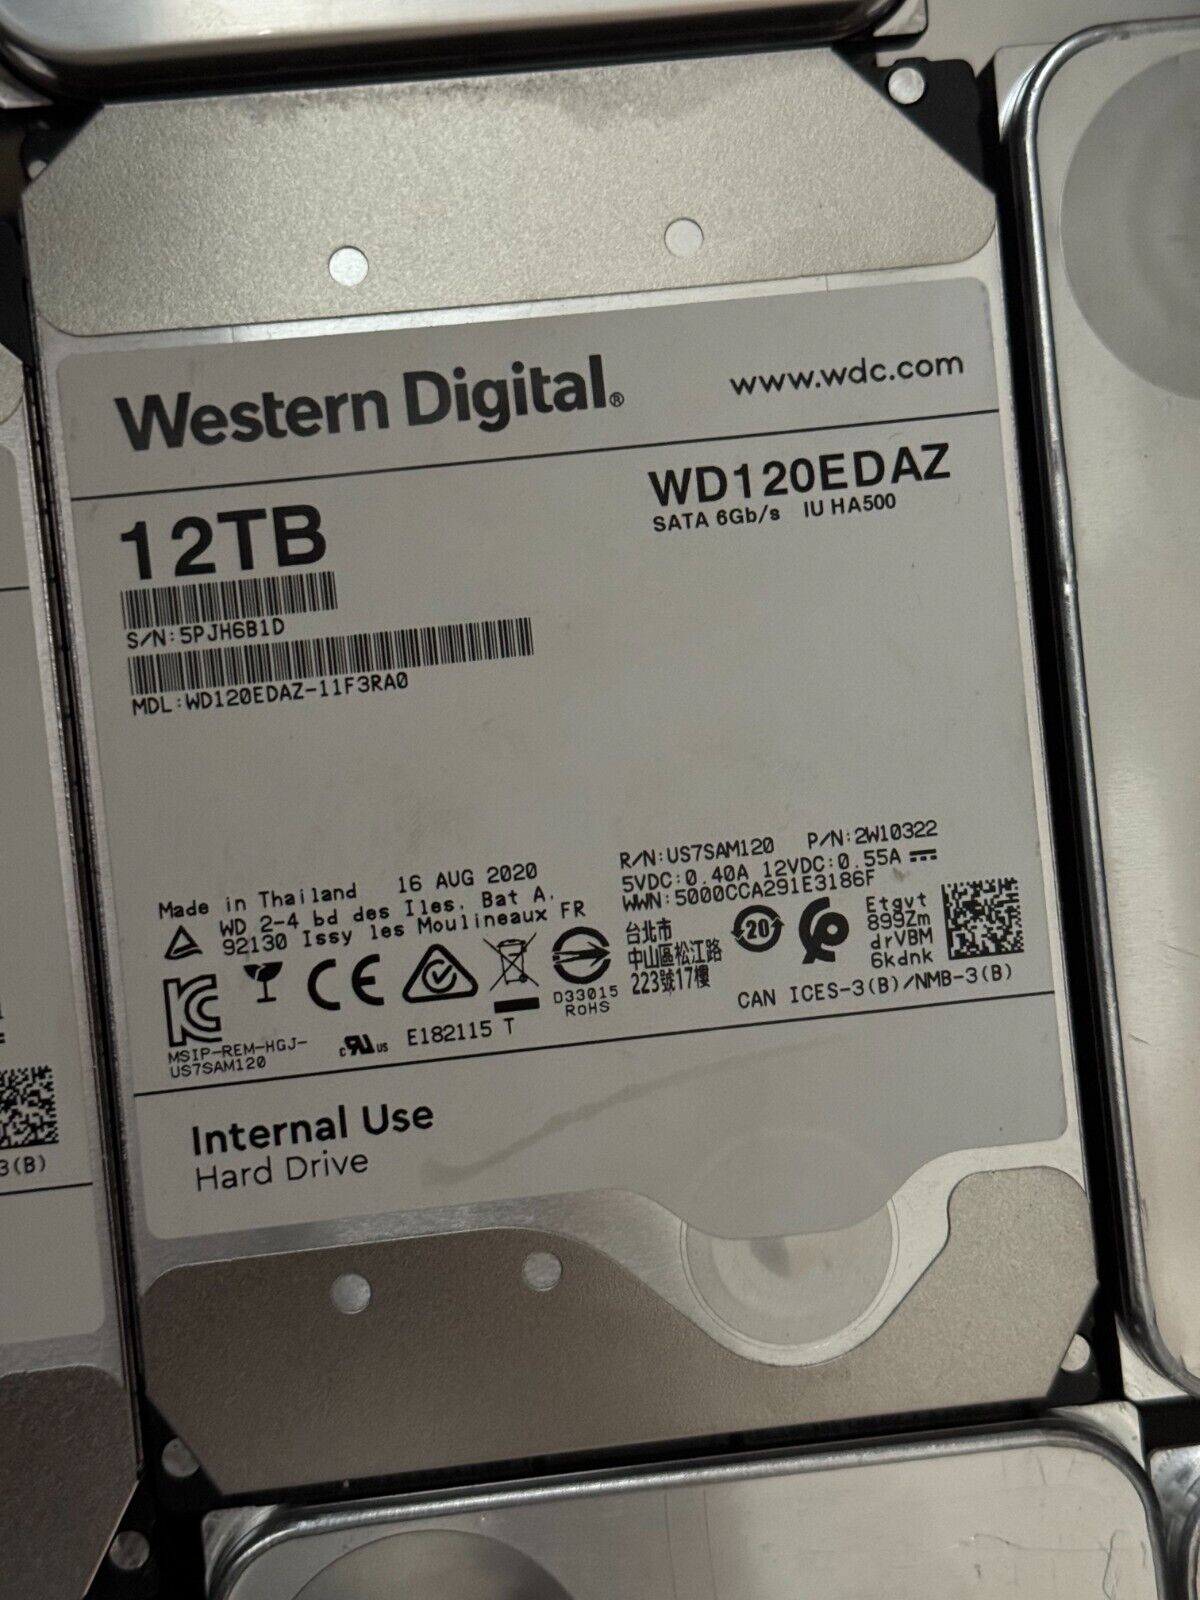 12TB Western Digital SATA Hard drive - wd120edaz